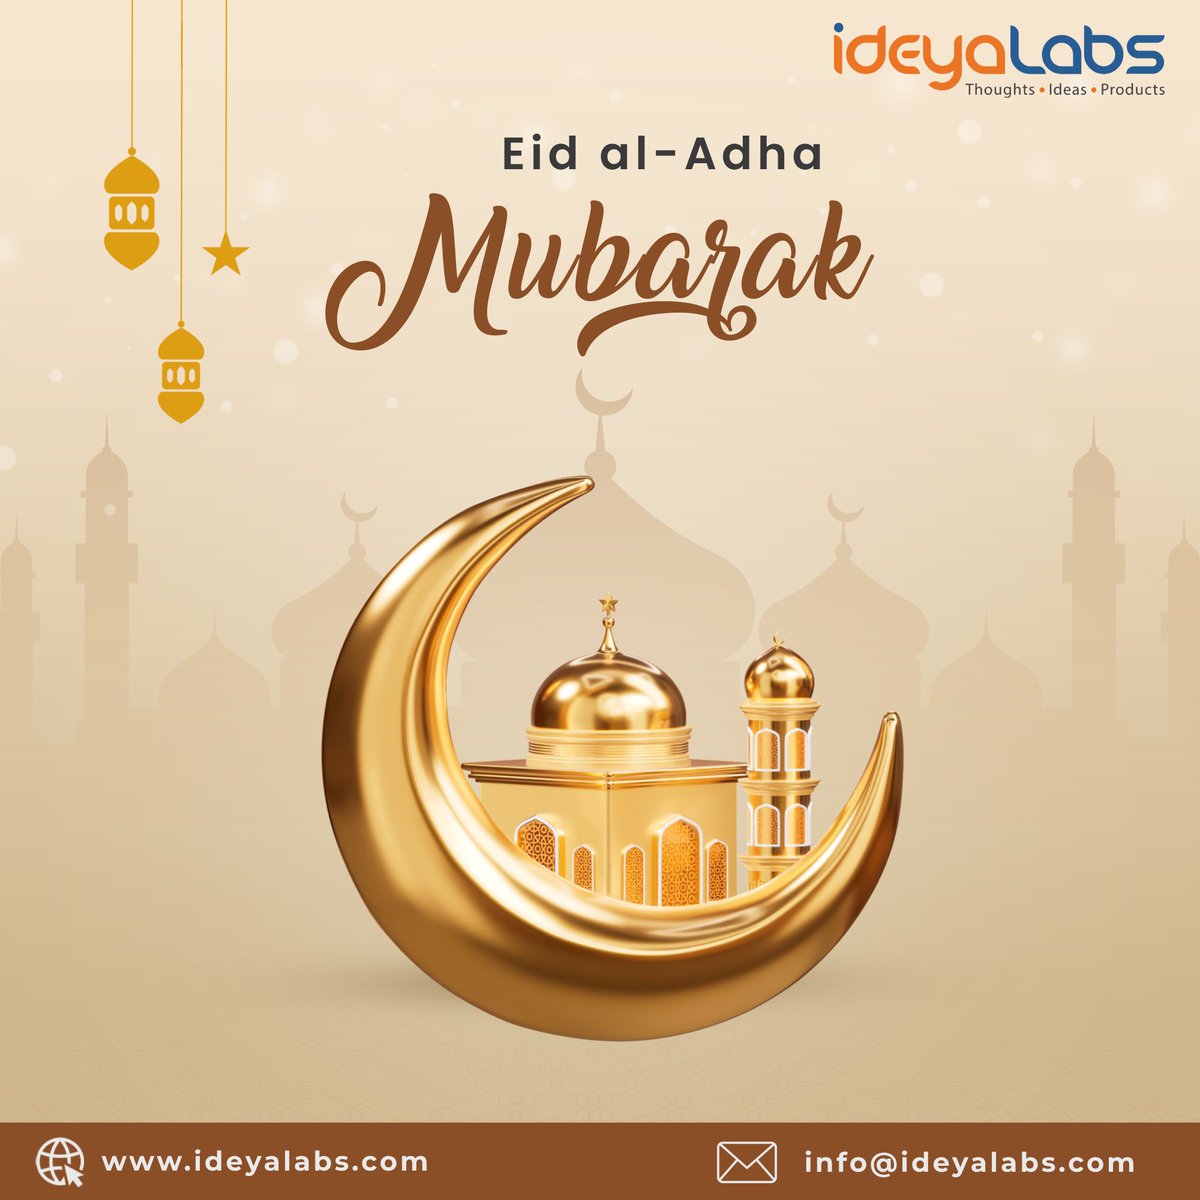 Eid al - Adha Mubarak!
#ideyaLabs #Eid #EidMubarak #DoingTheRightThing #eidaladha2023